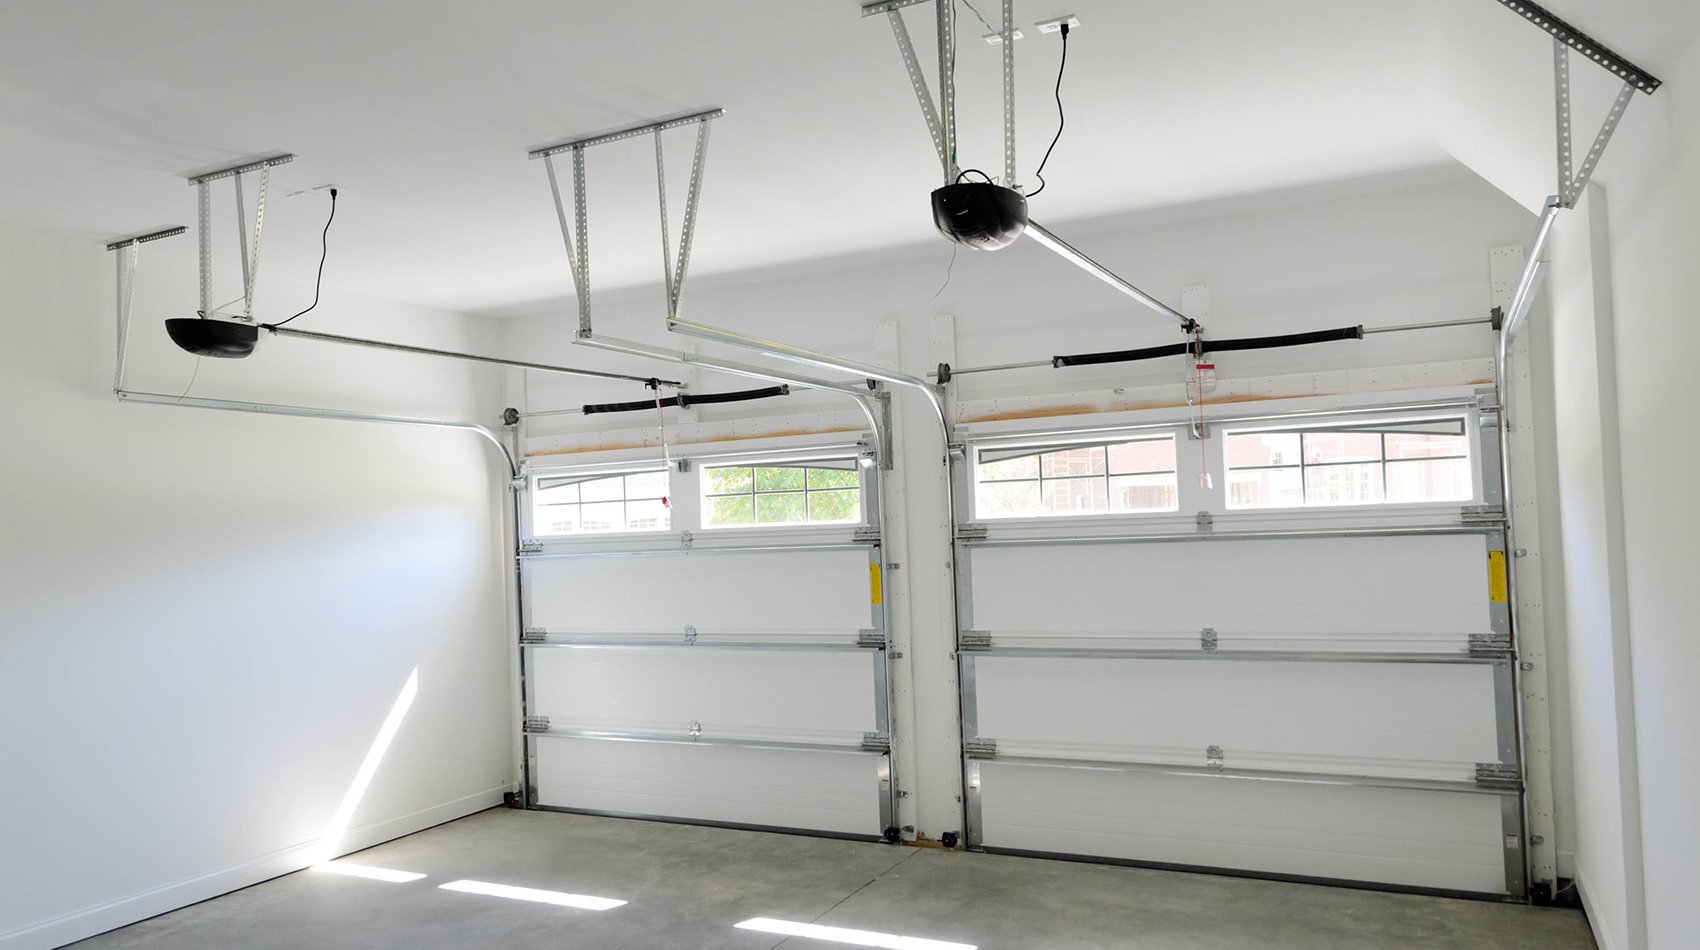 15 New Garage door light bulb problems for Remodeling